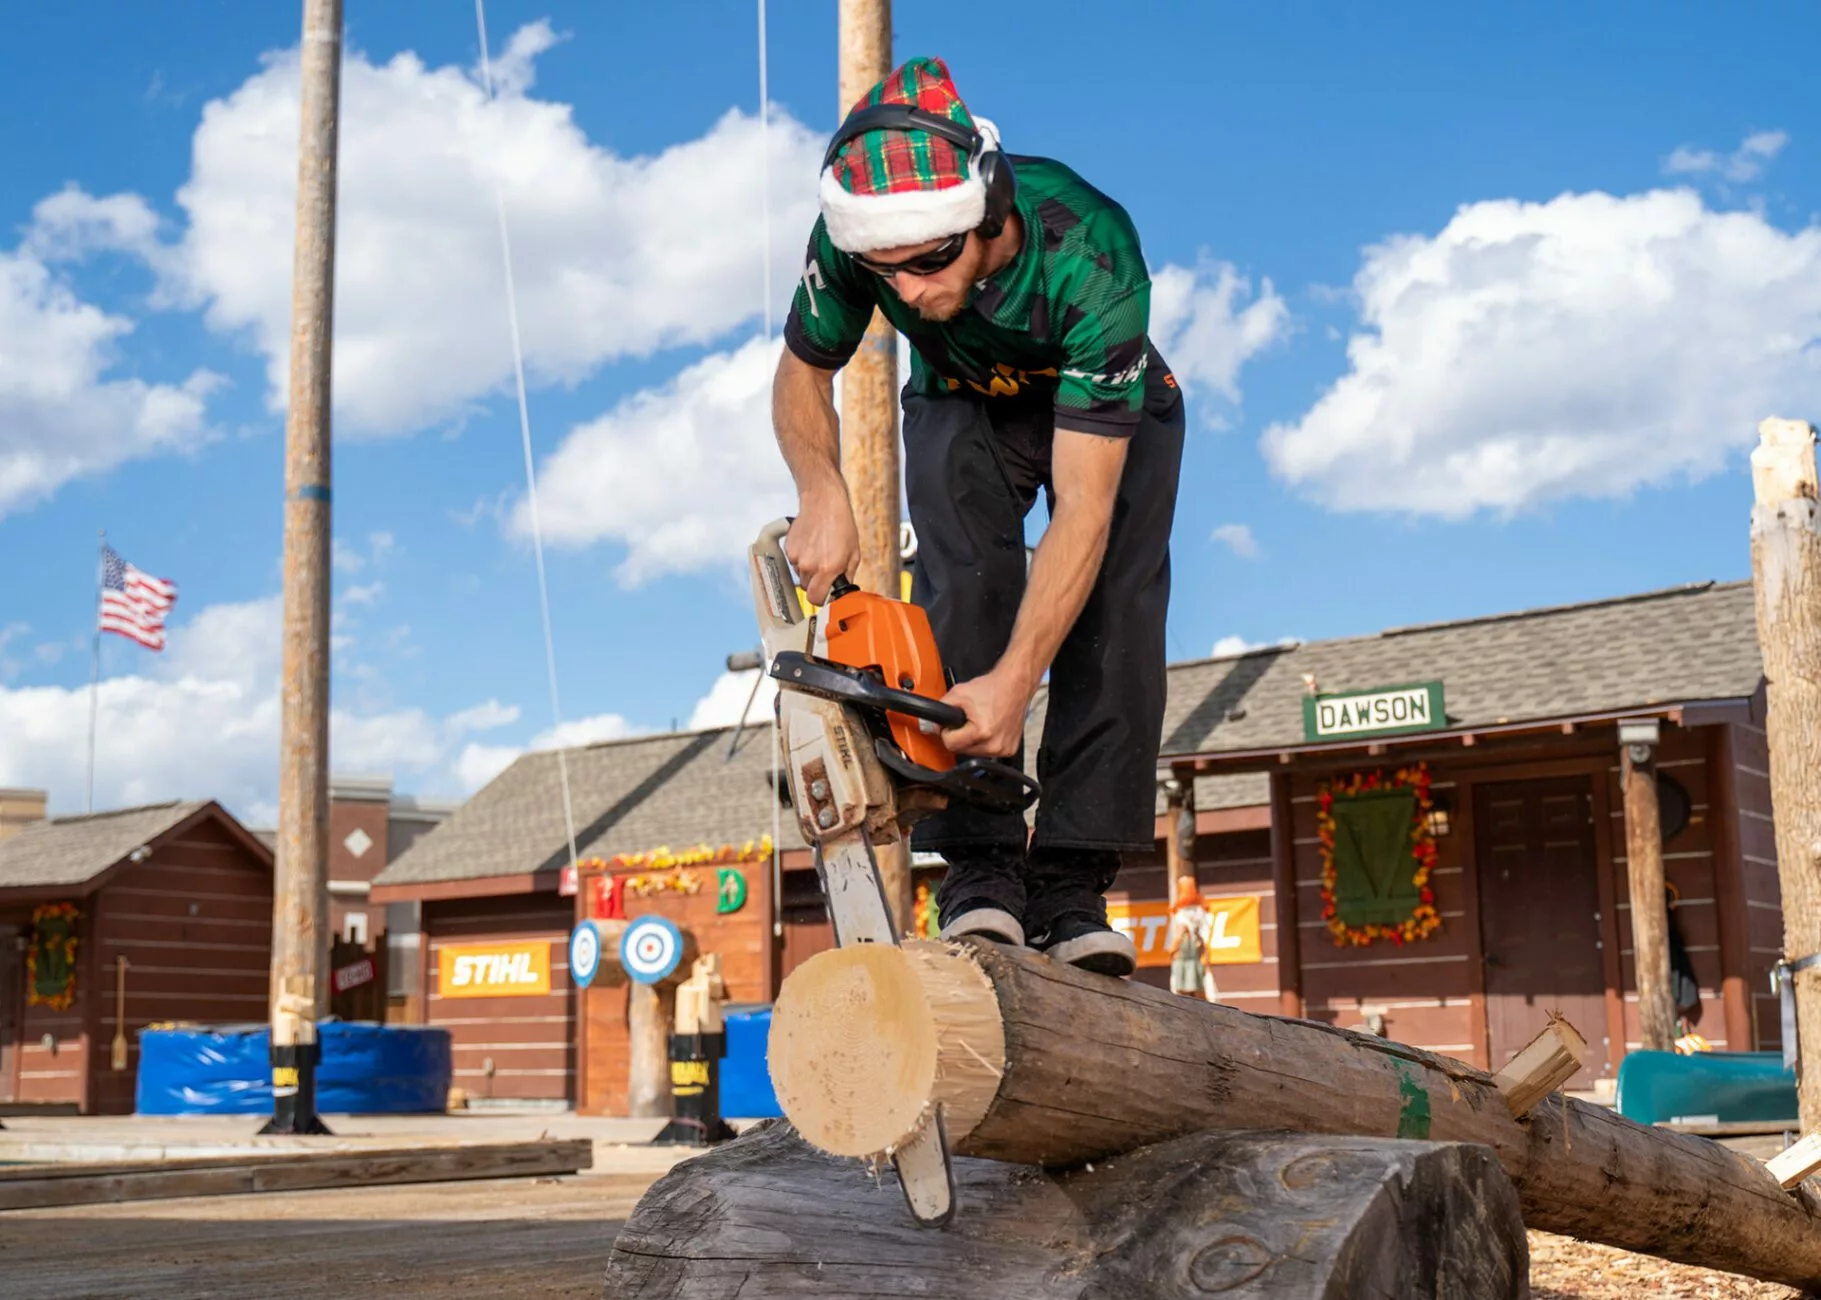 Lumberjack sawing a log during Christmas show